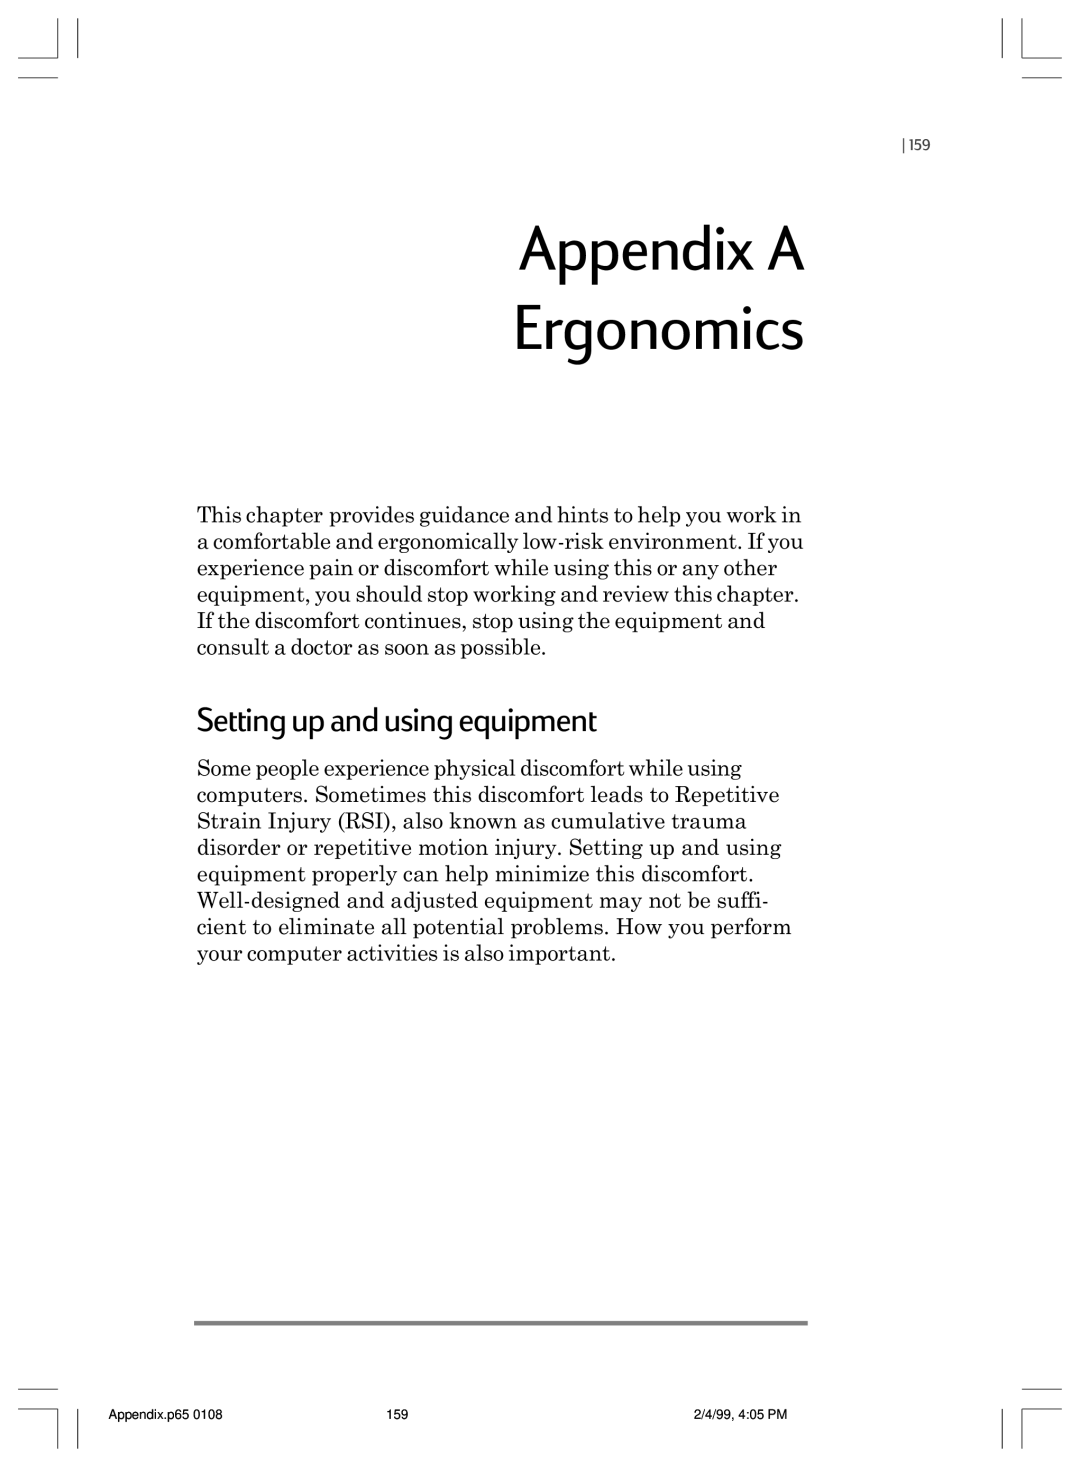 HP 820 E manual Appendix A Ergonomics, Setting up and using equipment 